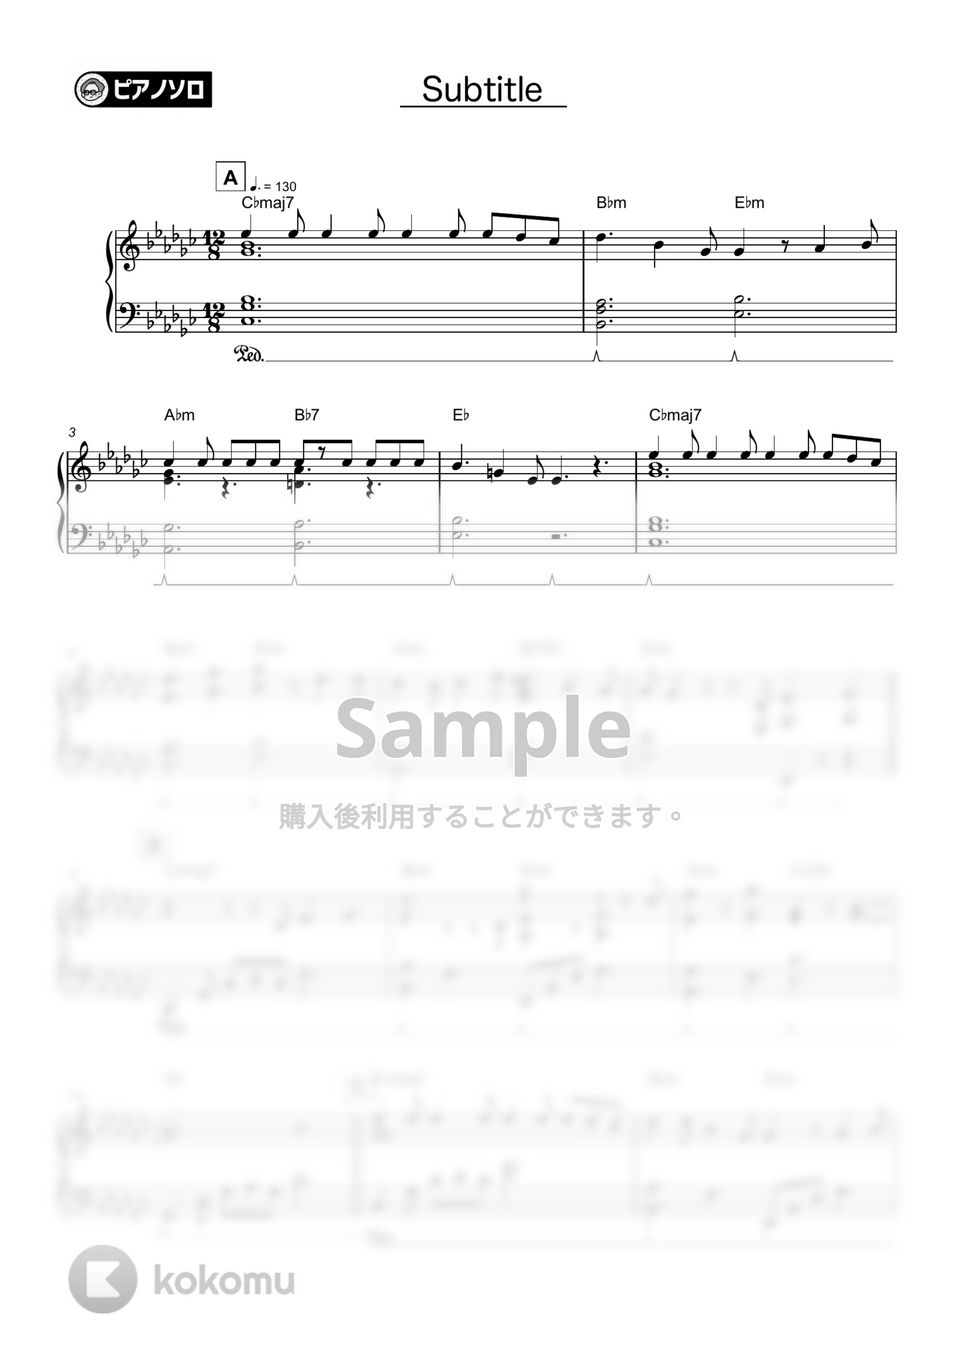 Official髭男dism - Subtitle（上級：原曲キー） by シータピアノ